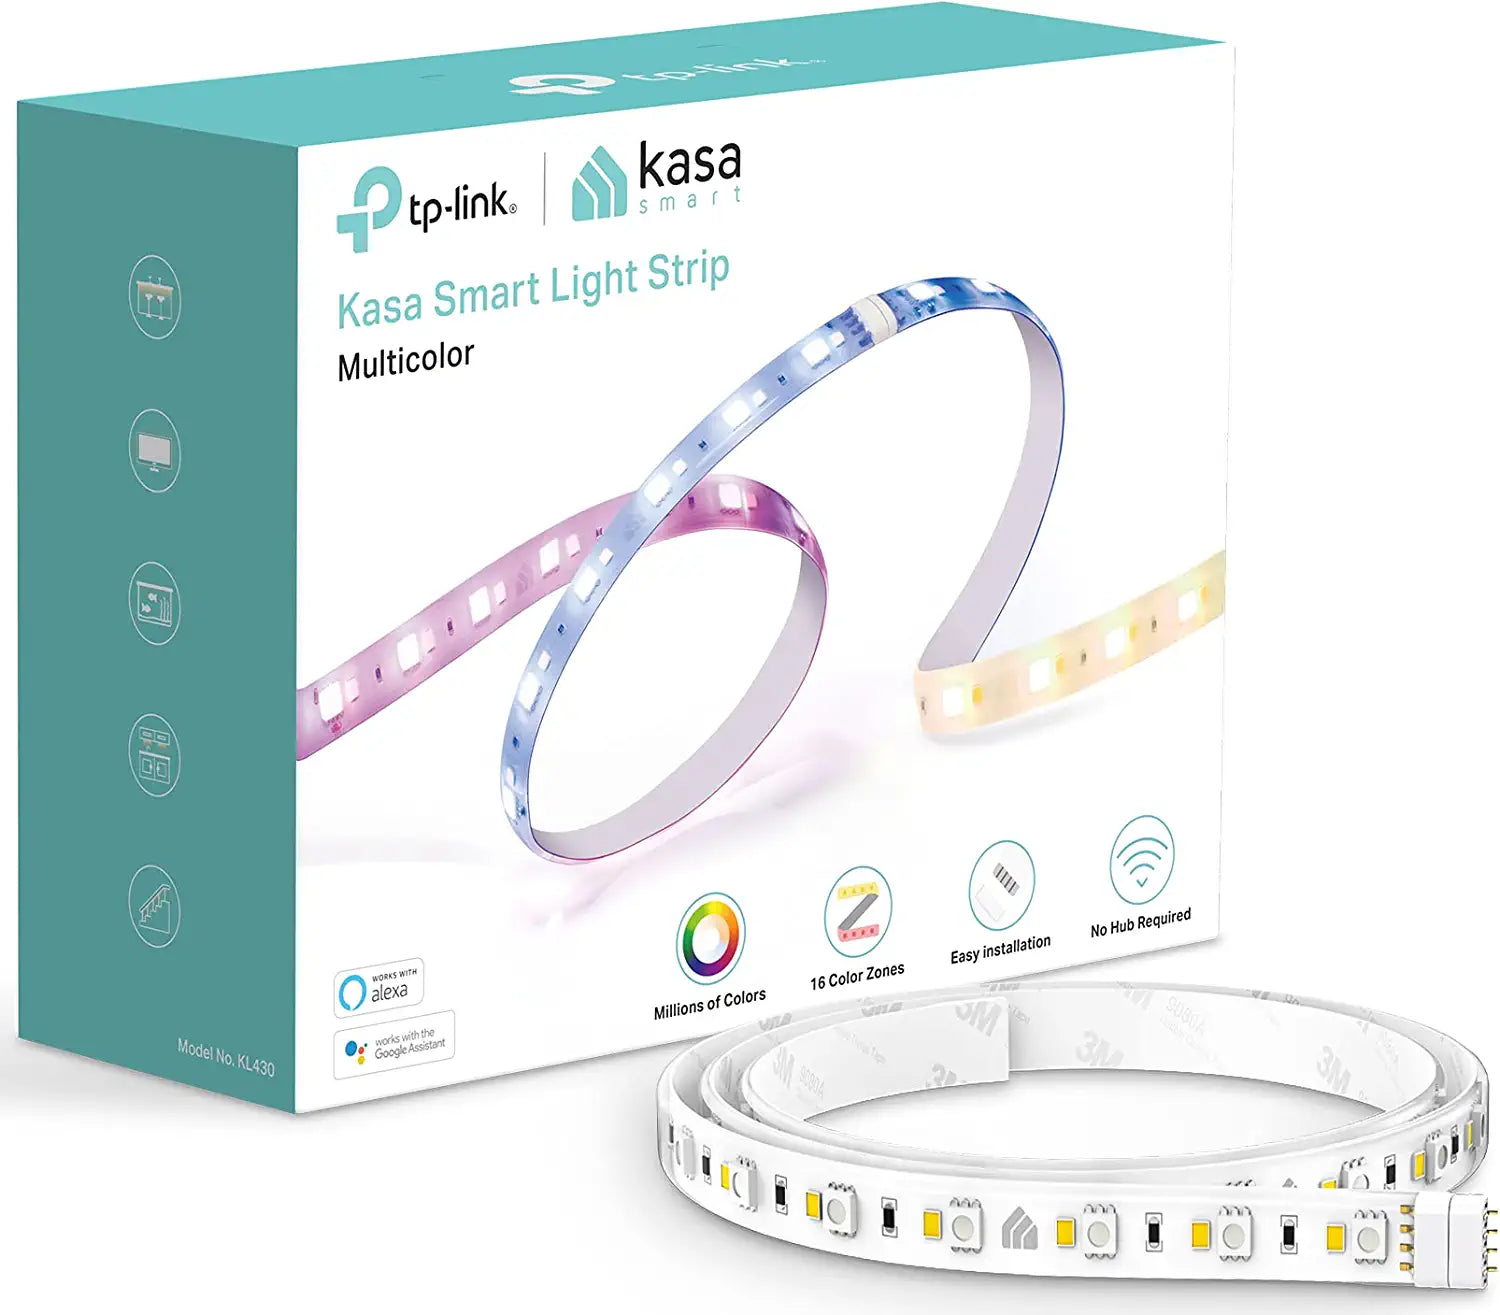 Kasa Smart Premium LED Light Strip KL430, 16 Color Zones RGBIC with Approx. 1400 lumen High Brightness, 6.6ft Wi-Fi LED Lights Work w/ Alexa &amp; Google Home, PU Coating, 2 Yr Warranty